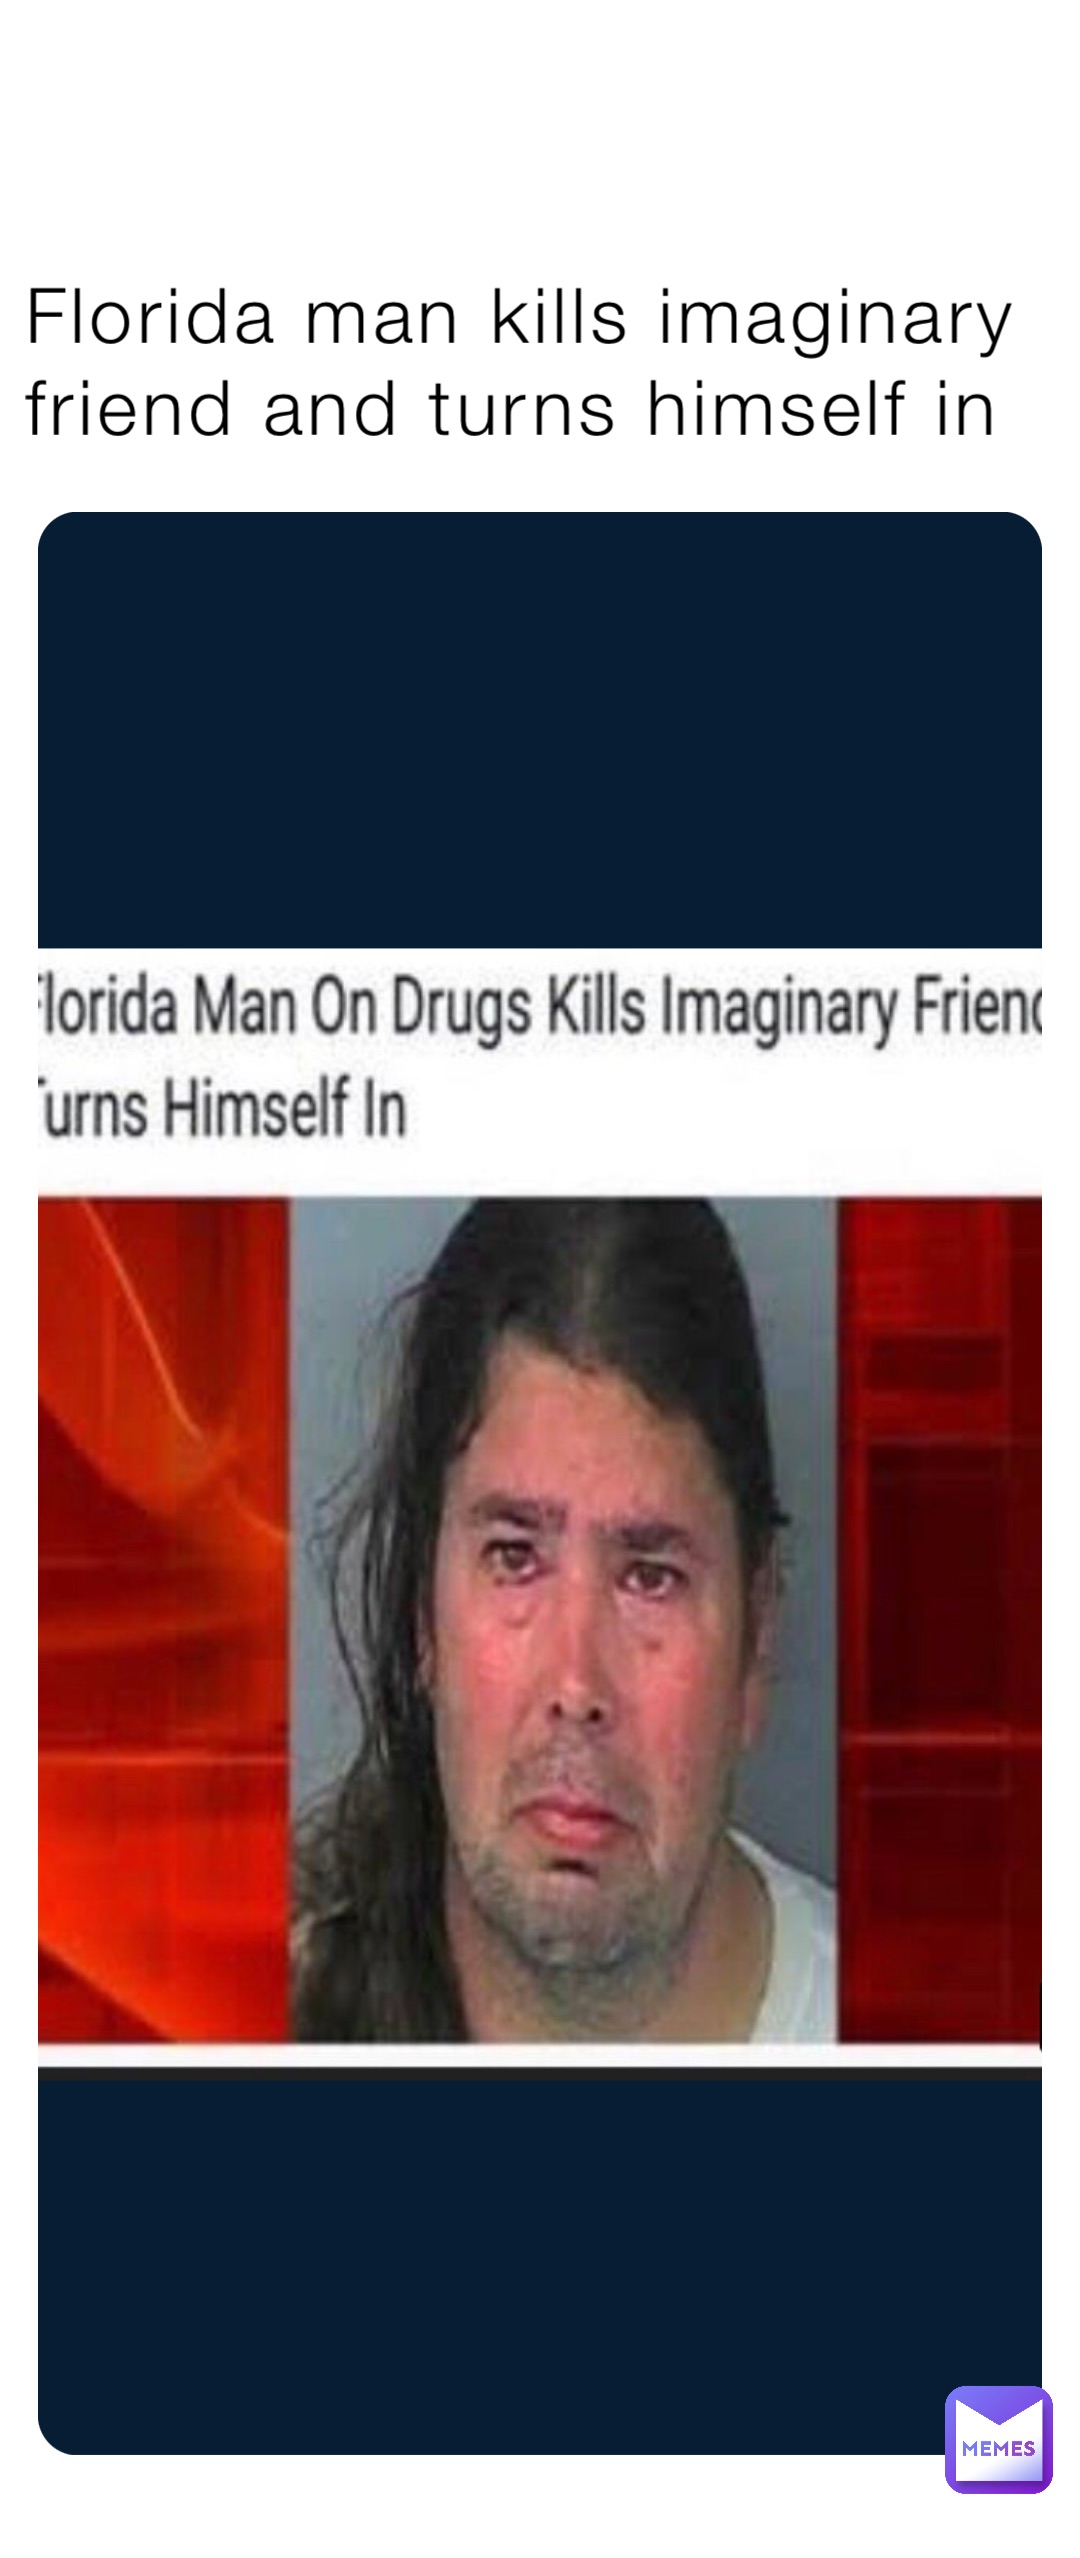 Florida man kills imaginary friend and turns himself in